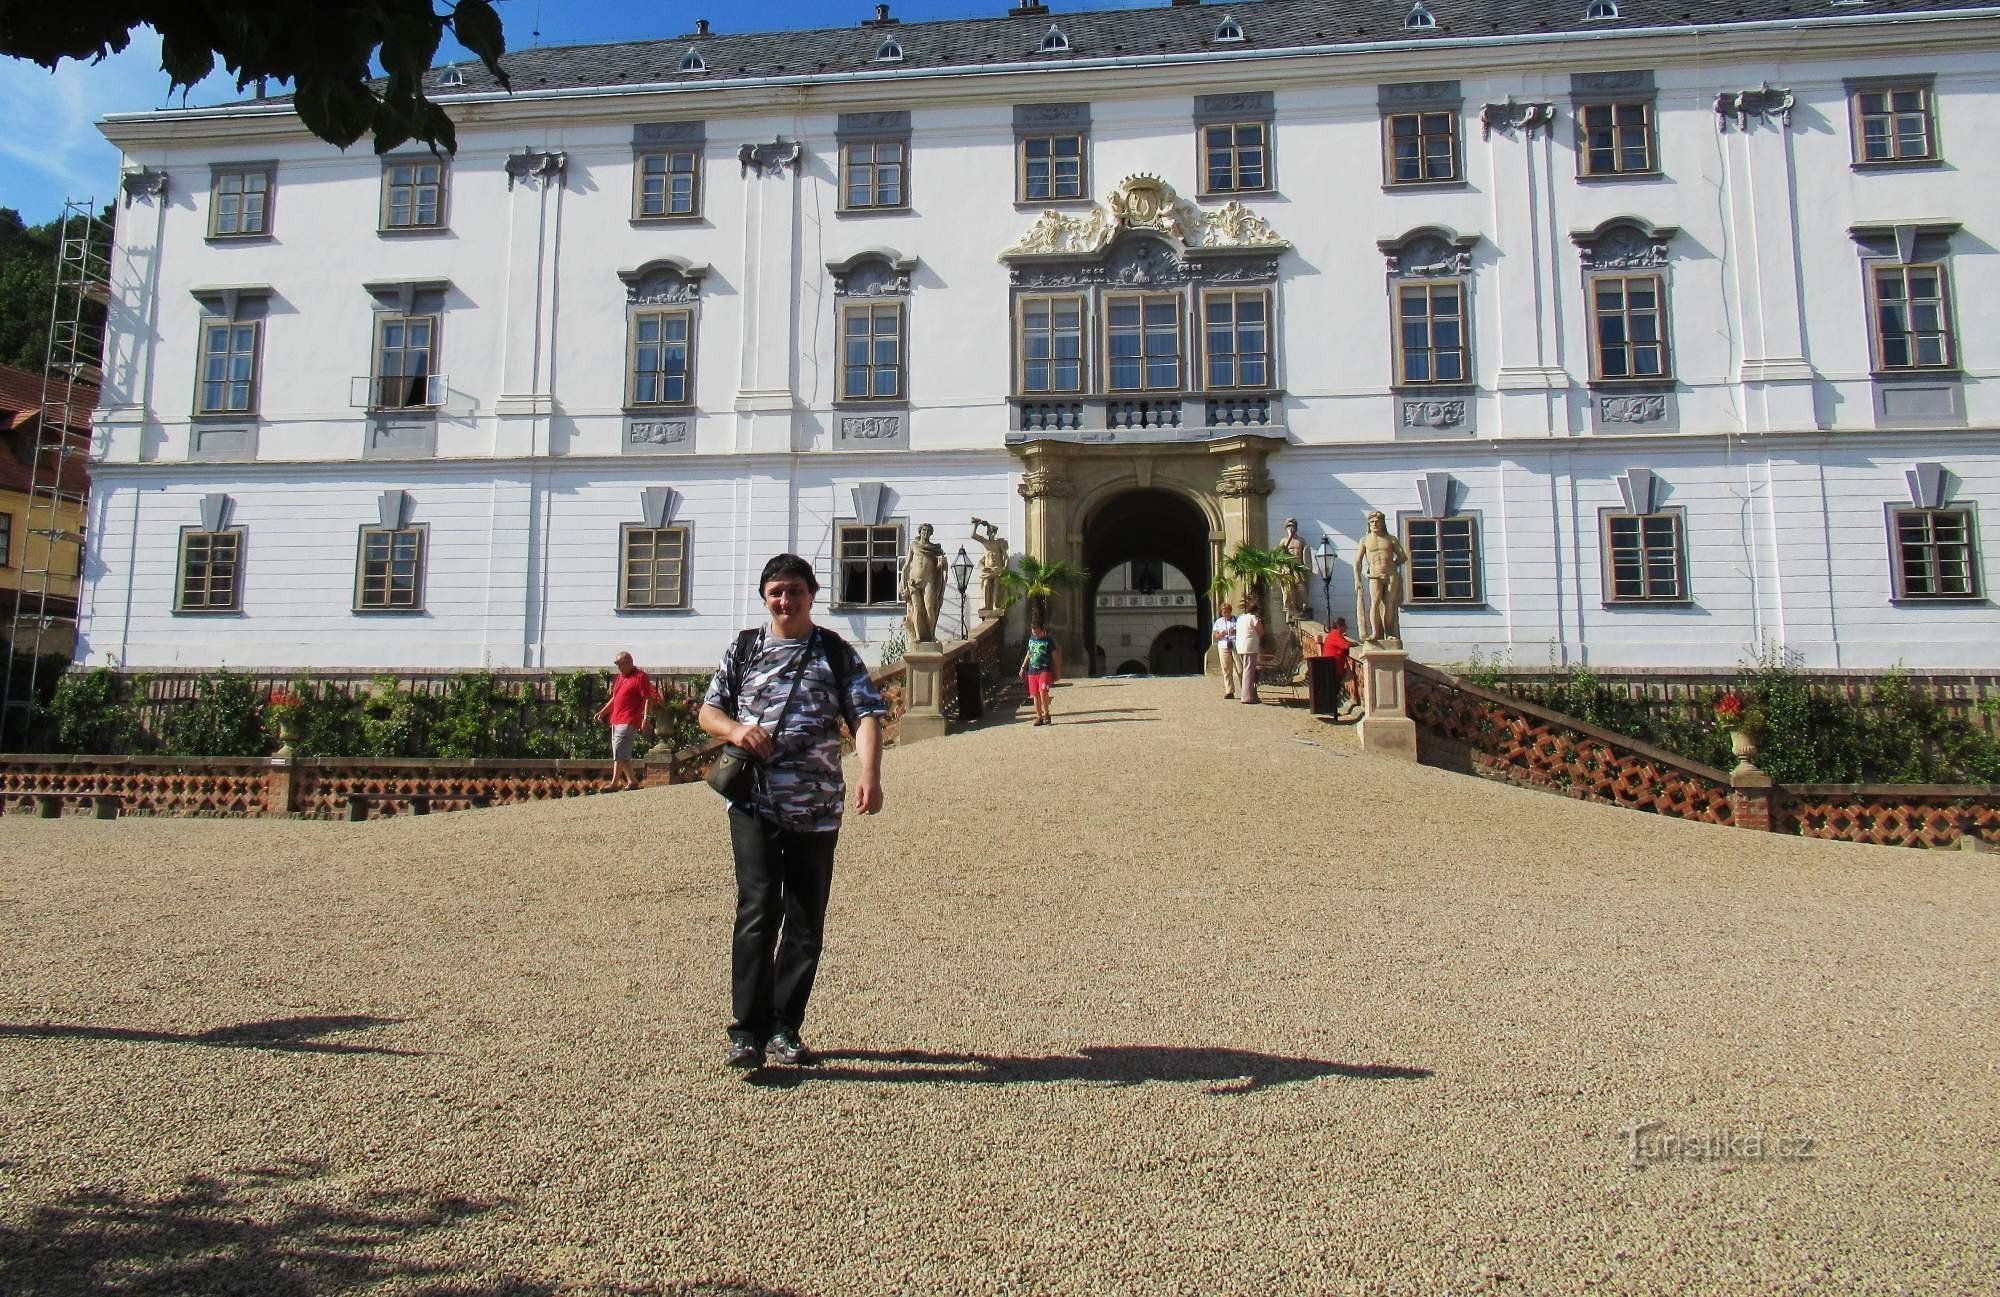 Šetnja baroknim dvorcem i vrtom dvorca u Lysicama